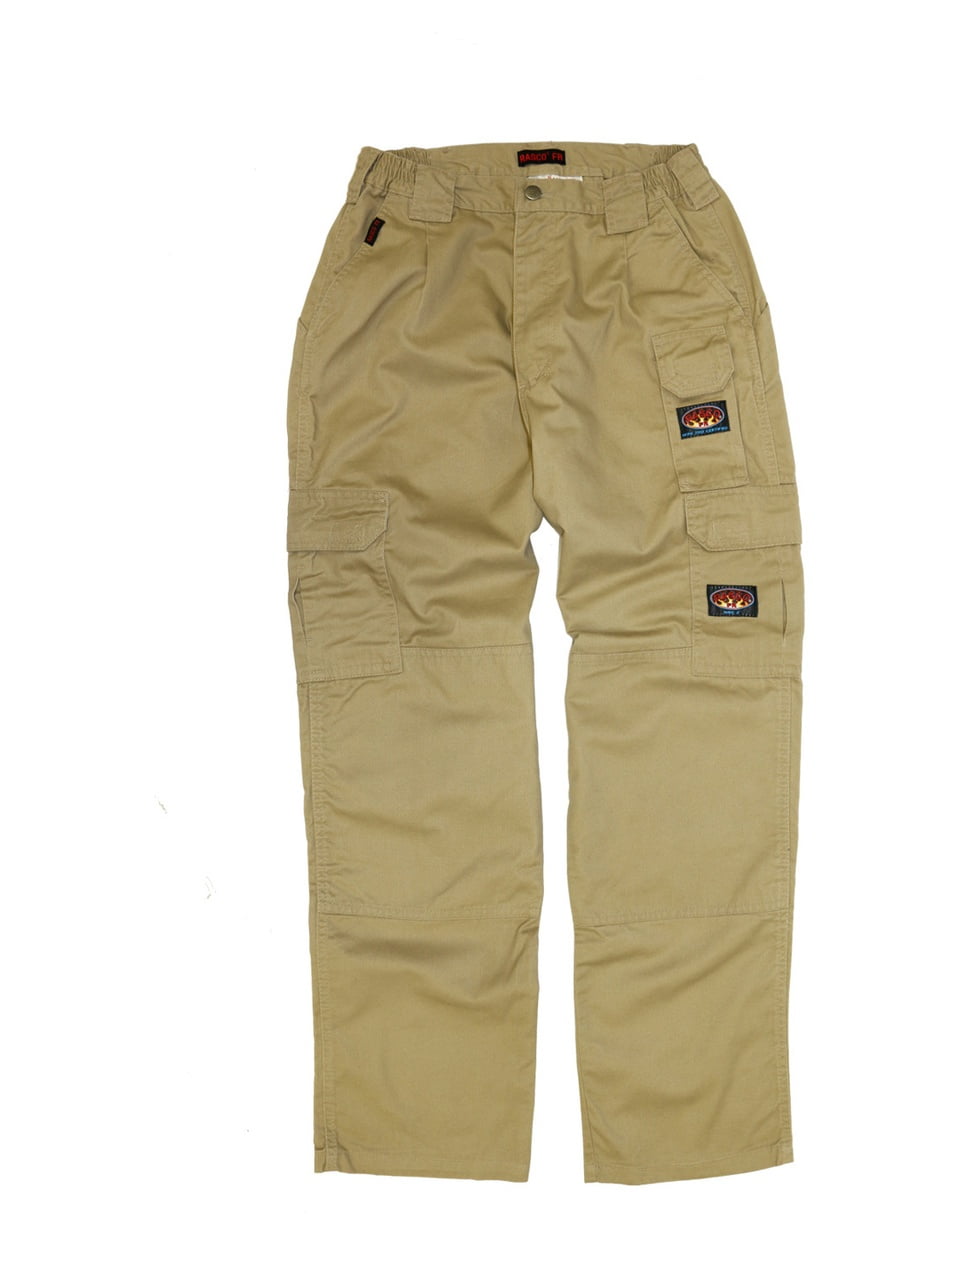 Rasco FR Khaki Field Pants - Walmart.com